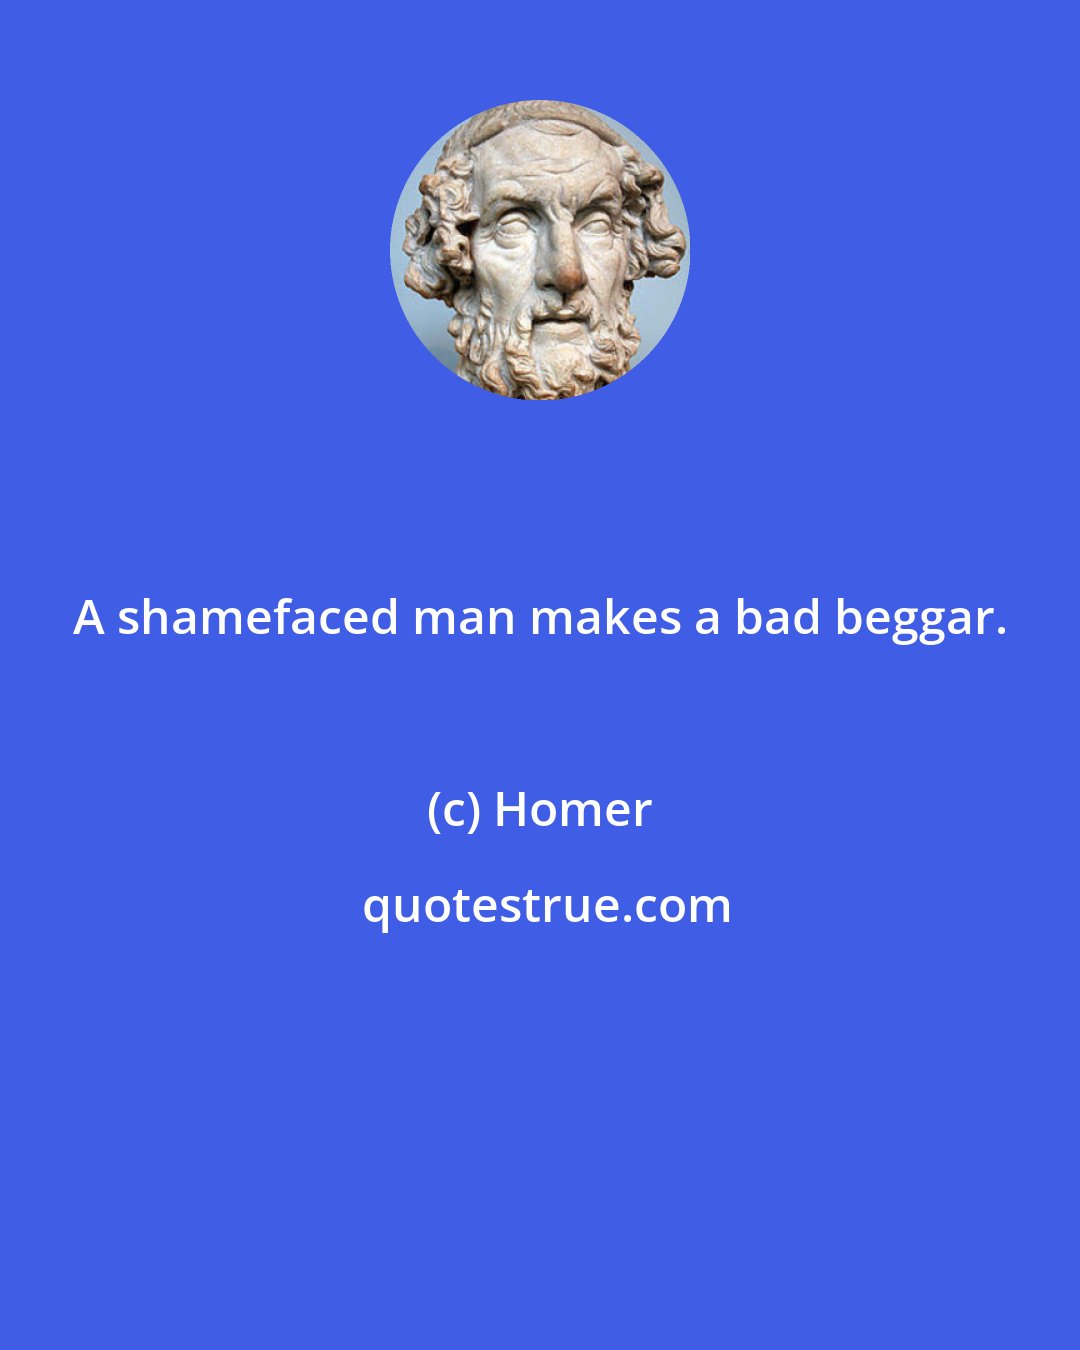 Homer: A shamefaced man makes a bad beggar.